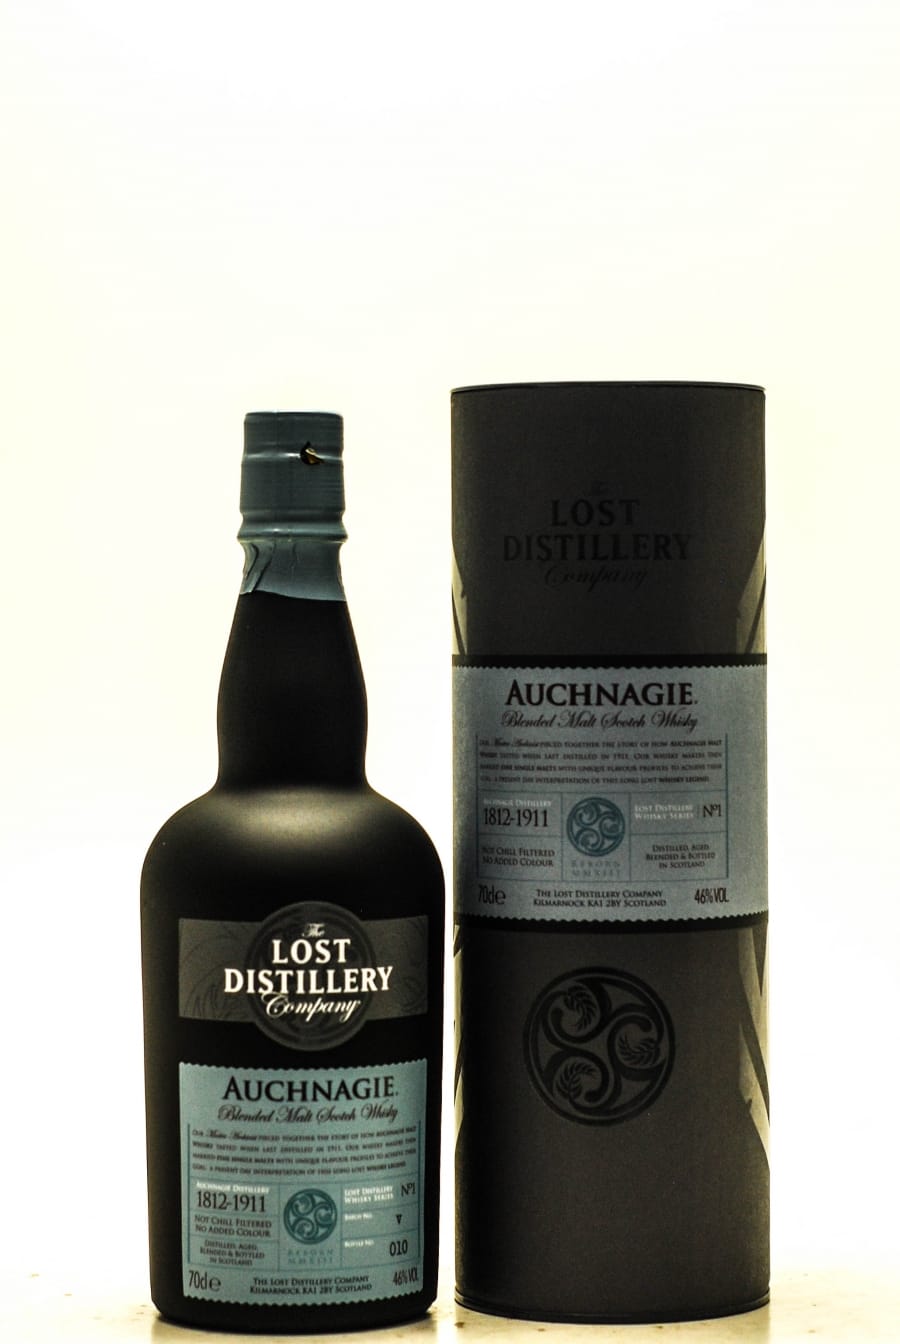 Auchnagie - The Lost Distillery Company Batch 5 46% NV Perfect